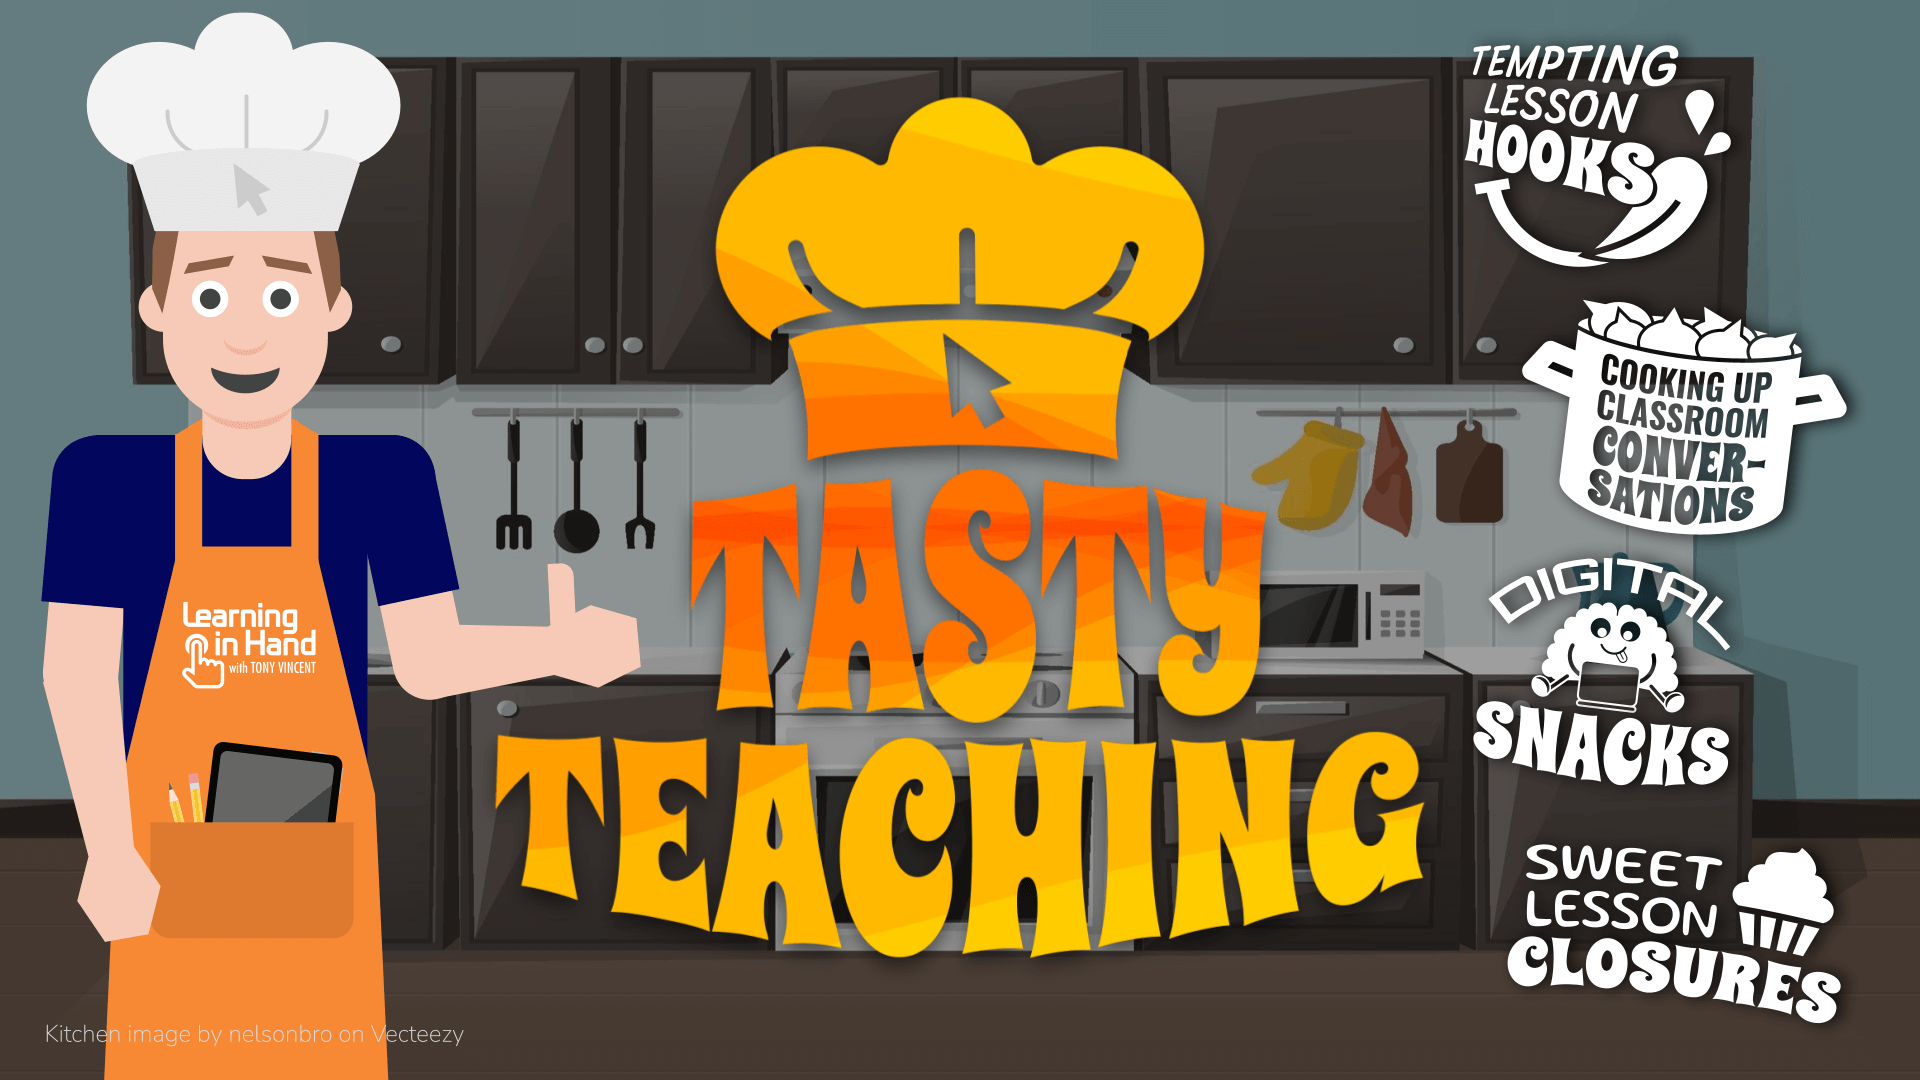 Tasty Teaching.png